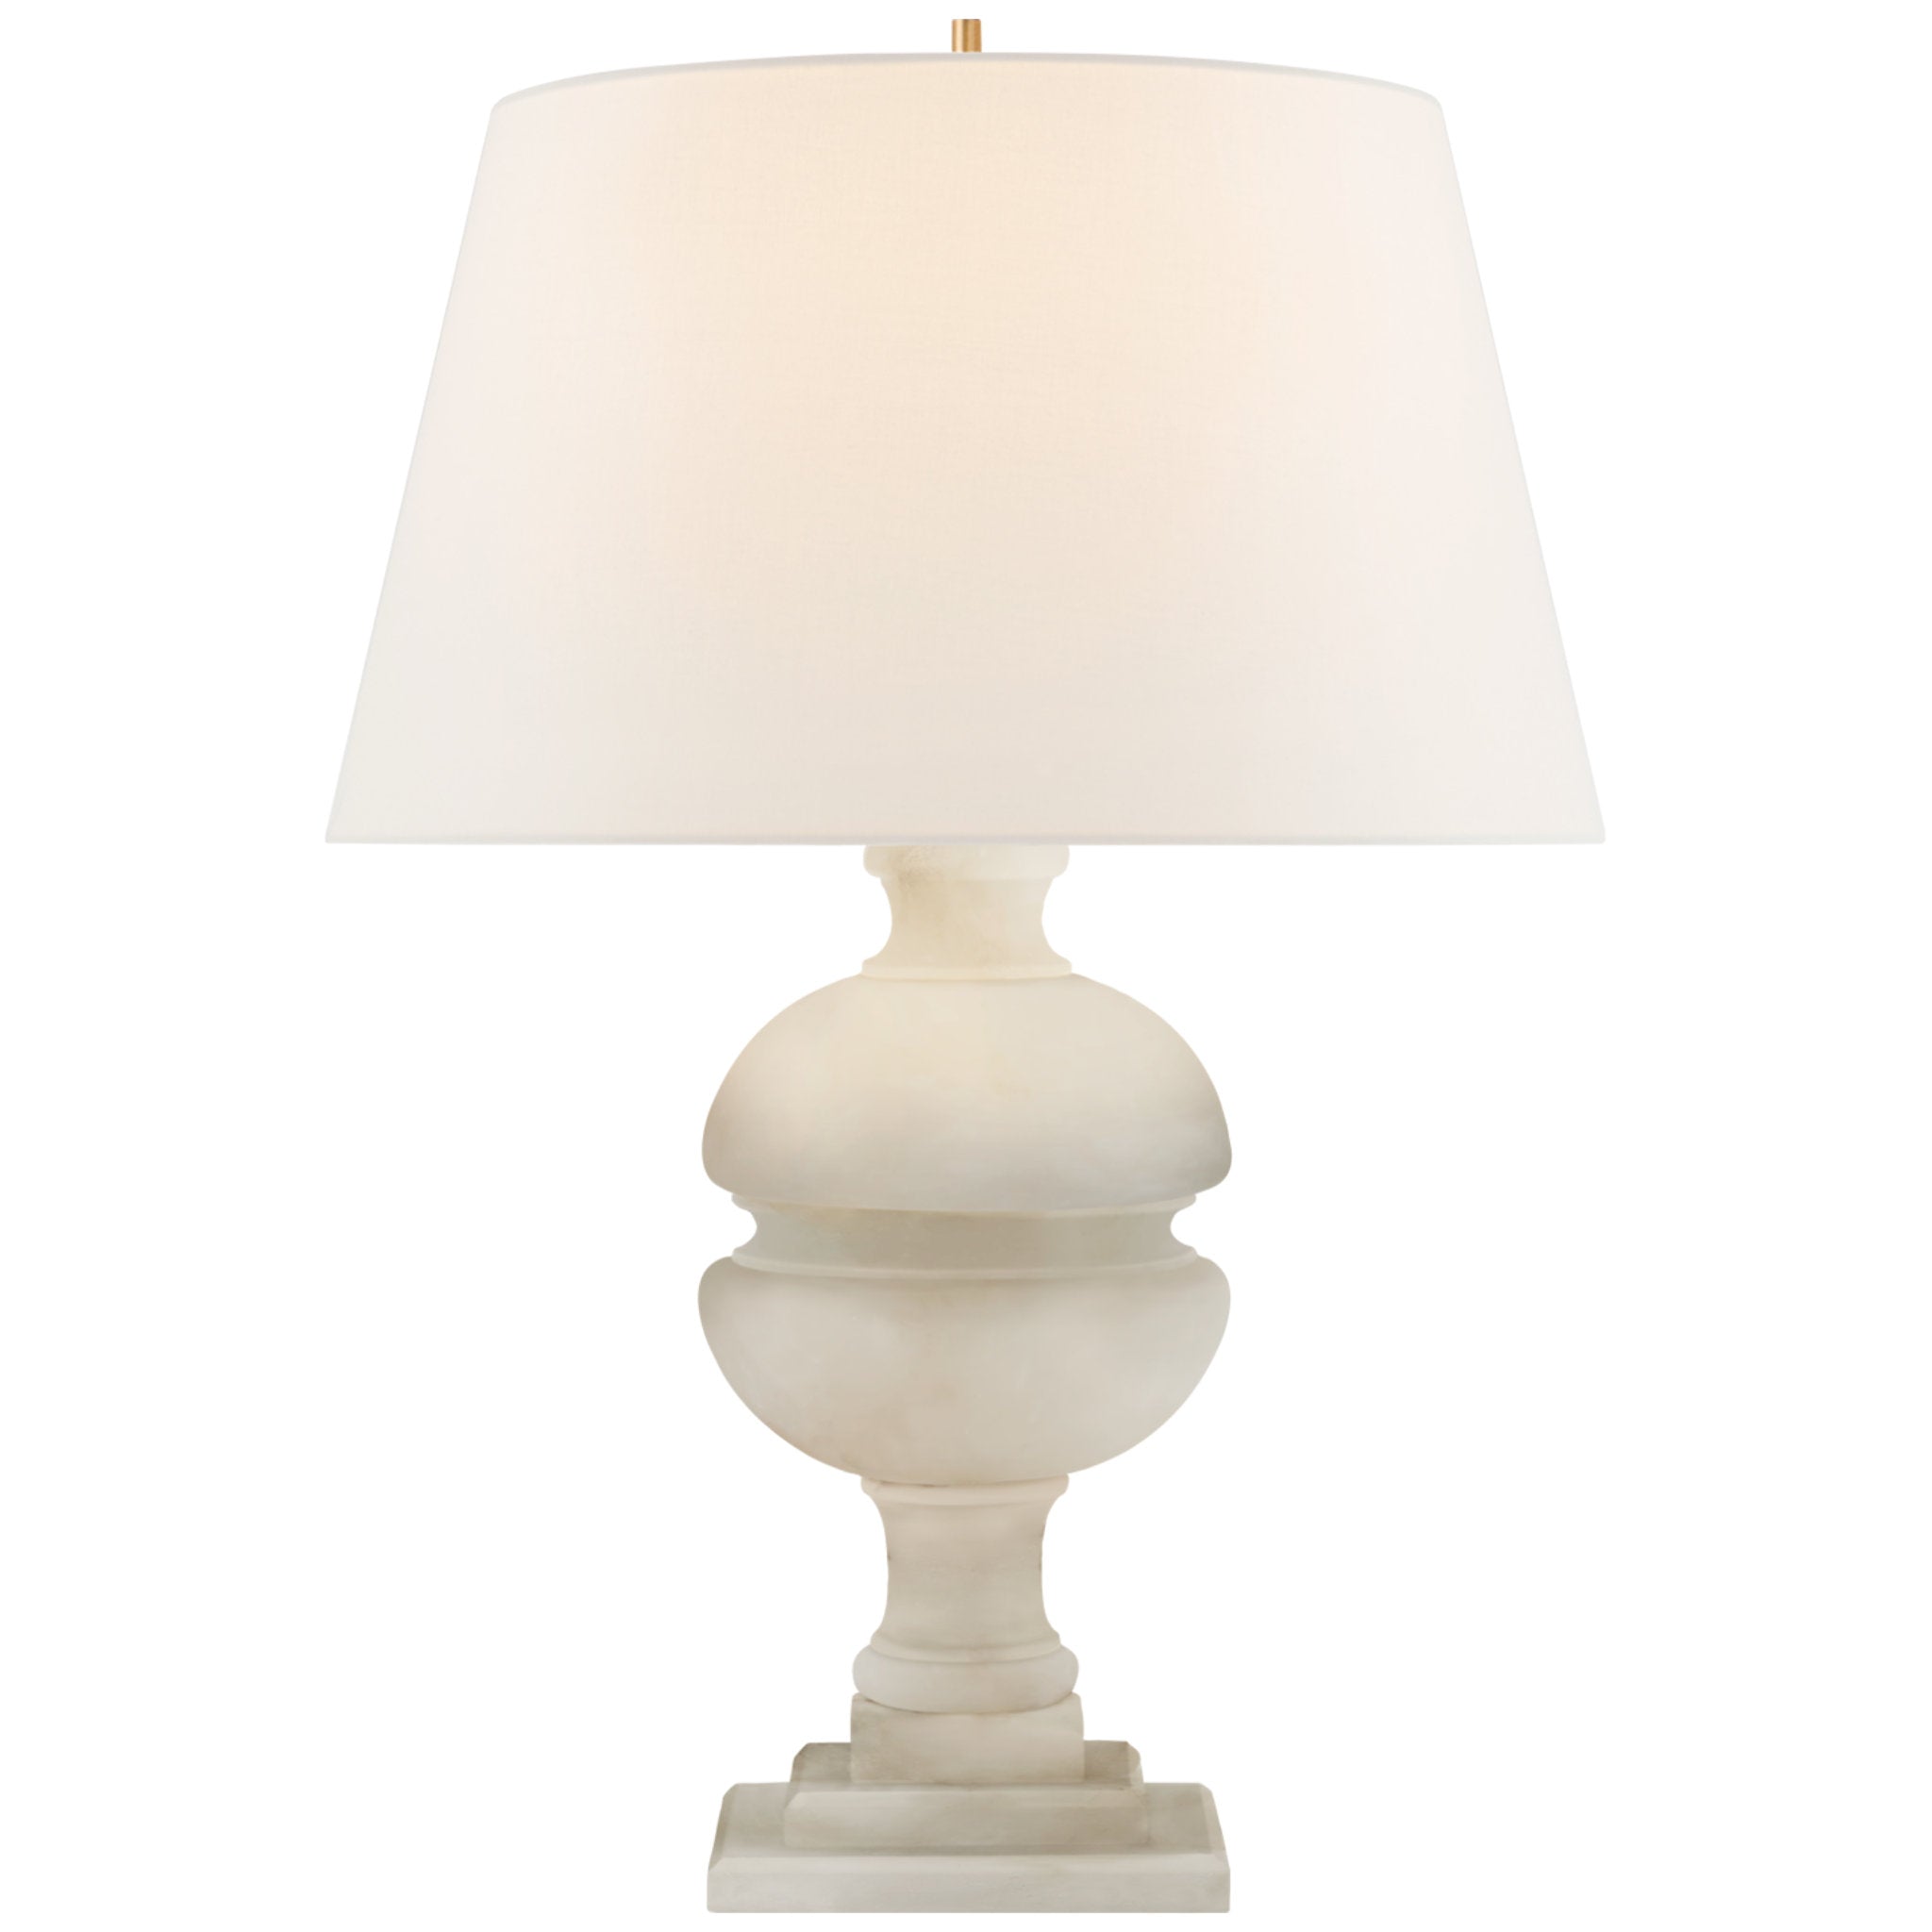 Alexa Hampton Desmond Table Lamp in Alabaster with Linen Shade